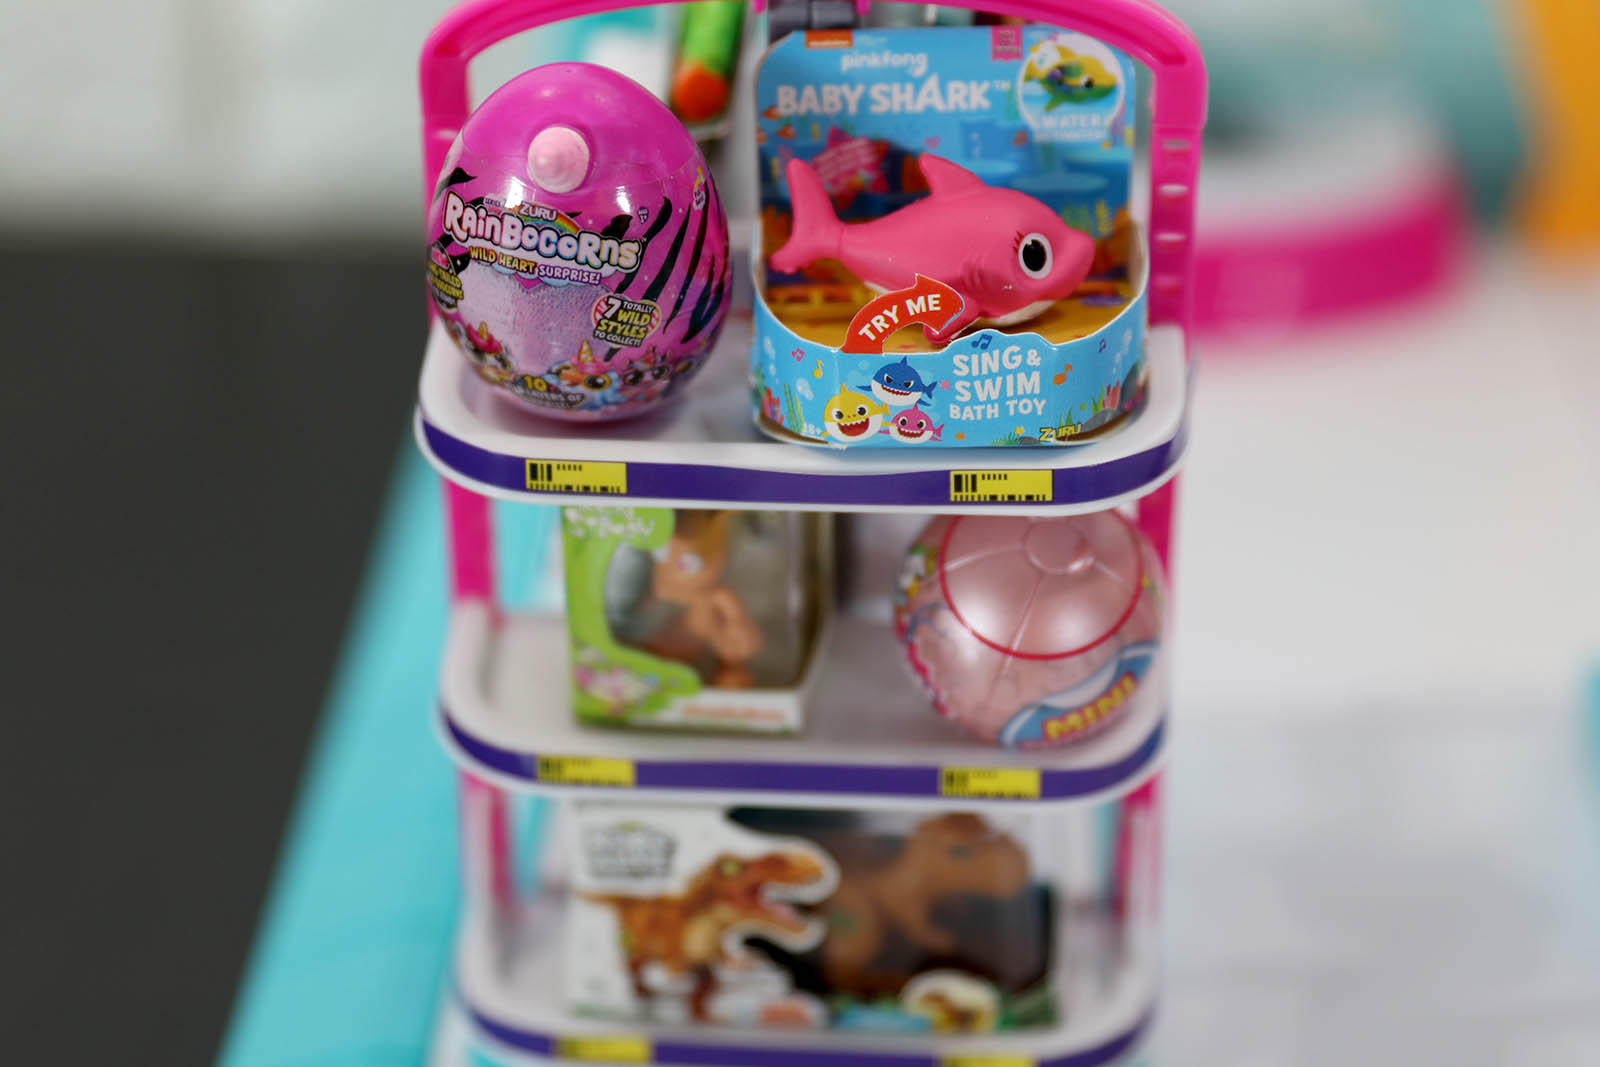 5 Surprise Mini Brands Toys Investigation 2021